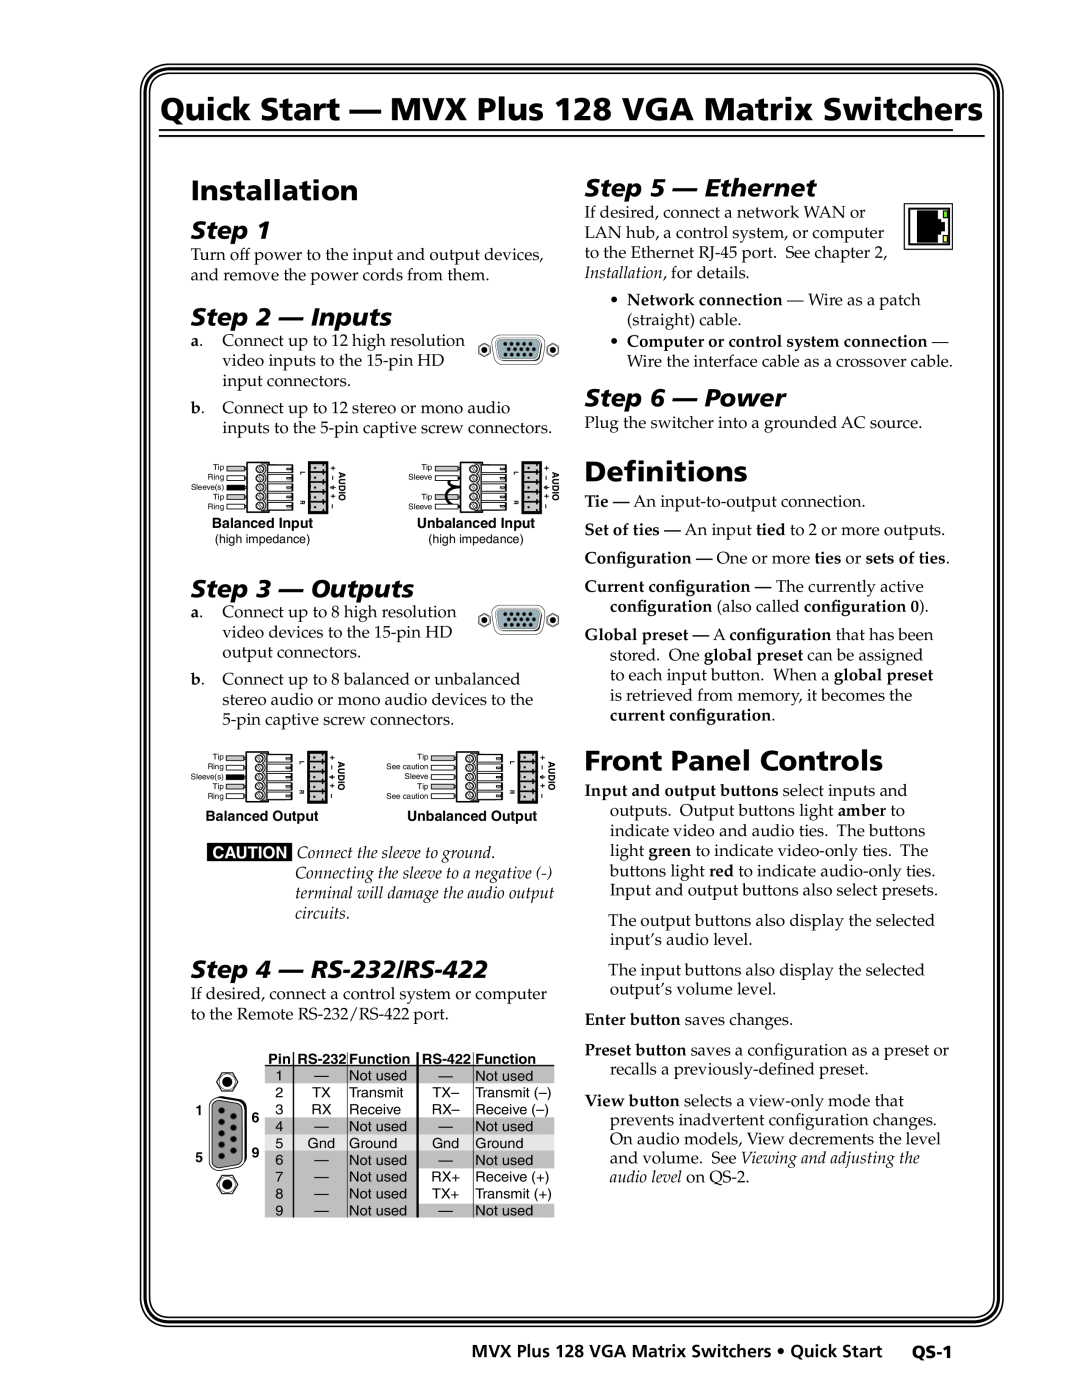 Extron electronic MVX PLUS 128 Quick Start - MVX Plus 128 VGA Matrix Switchers, Installation, Deﬁnitions, Step, Inputs 